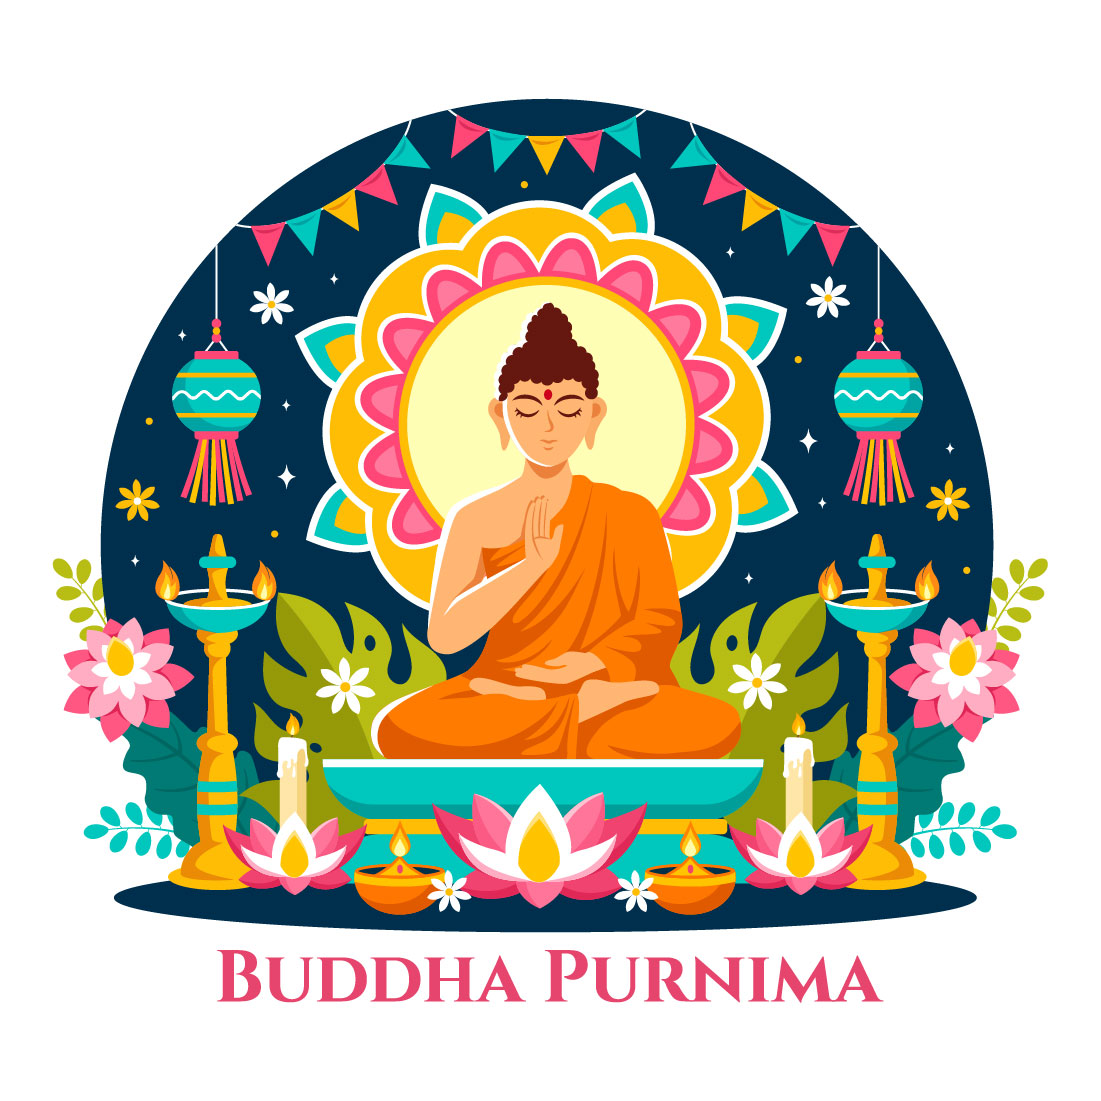 9 Buddha Purnima Illustration preview image.